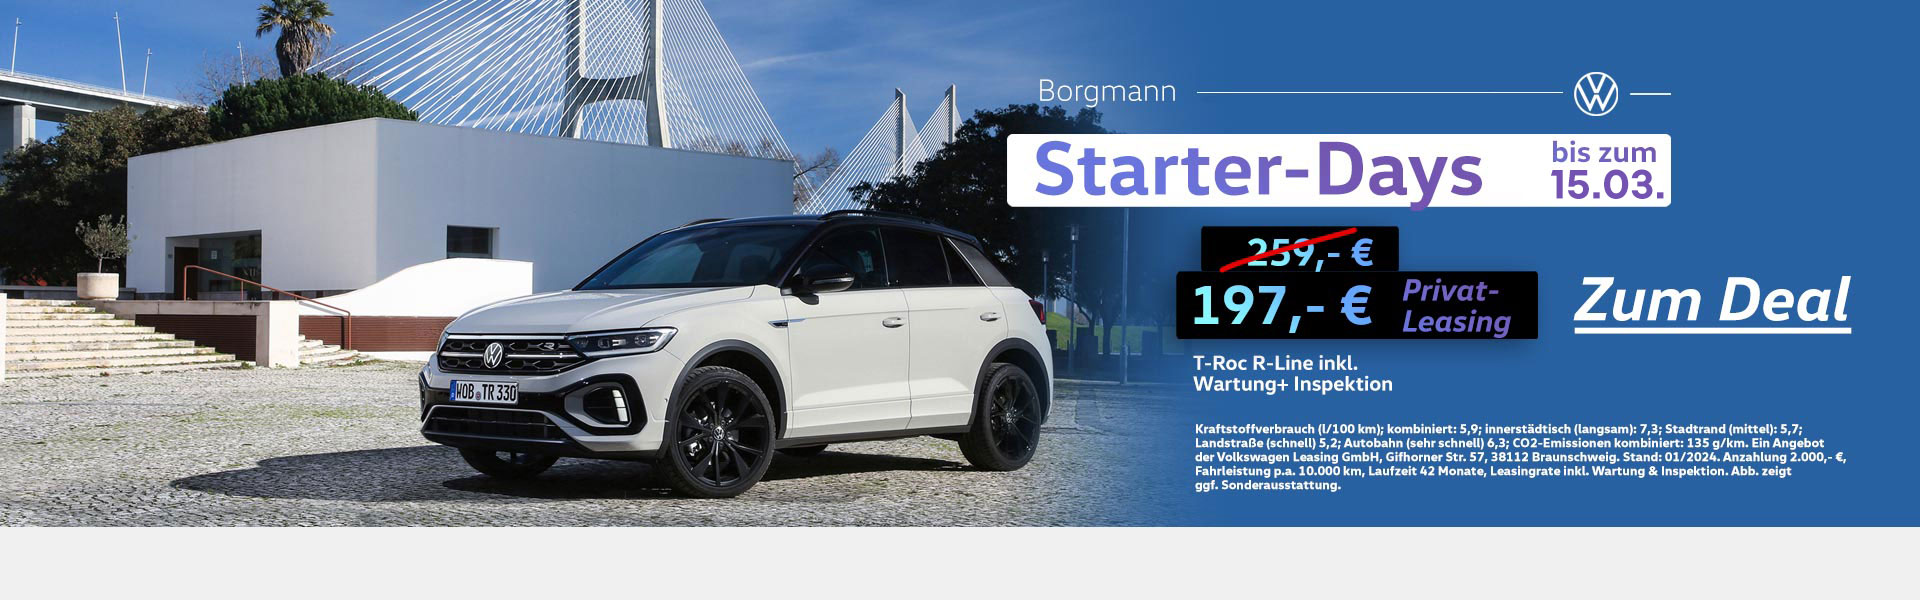 VW T-Roc Leasing Angebot bei Borgmann Krefeld